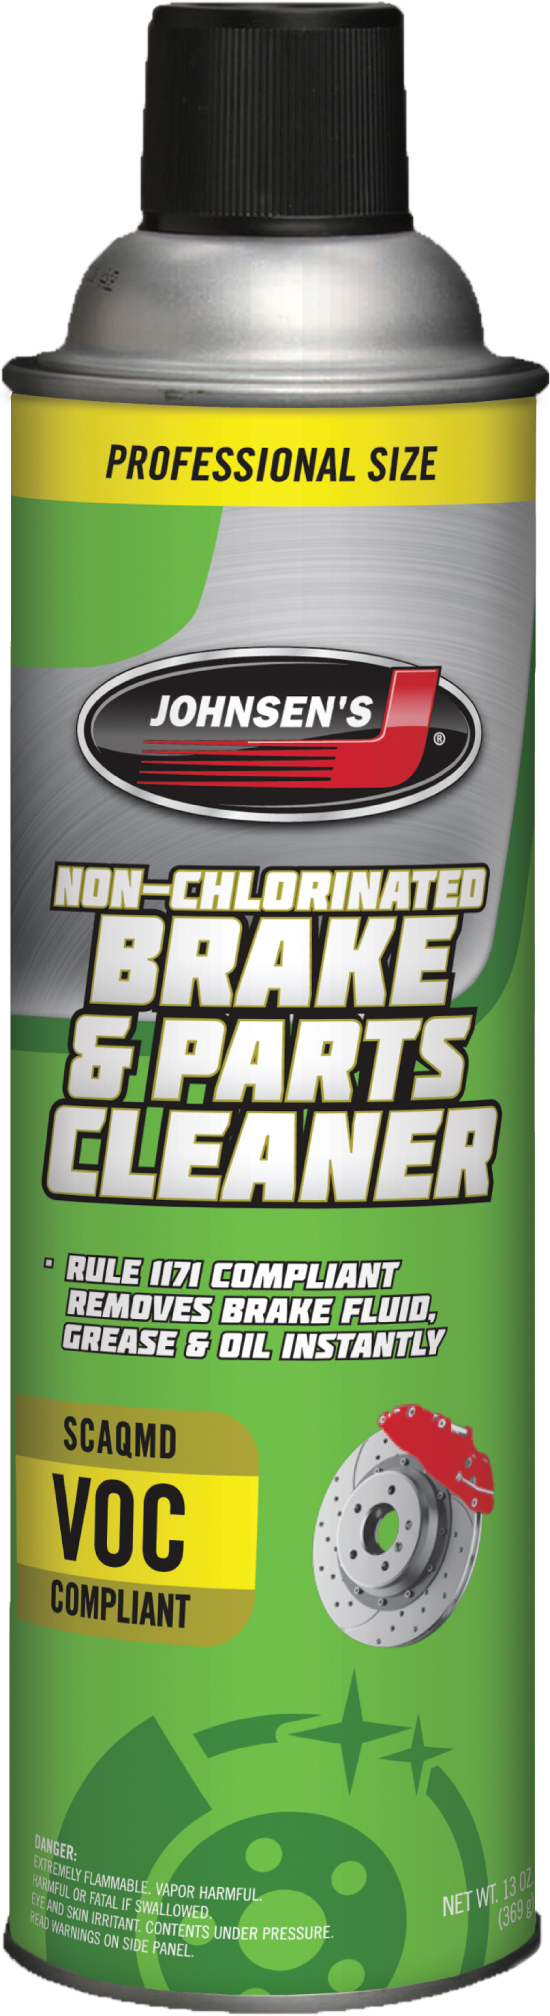 Johnsen's 13oz Non-Chlorinated Brake Cleaner 50 State Formula 2417C